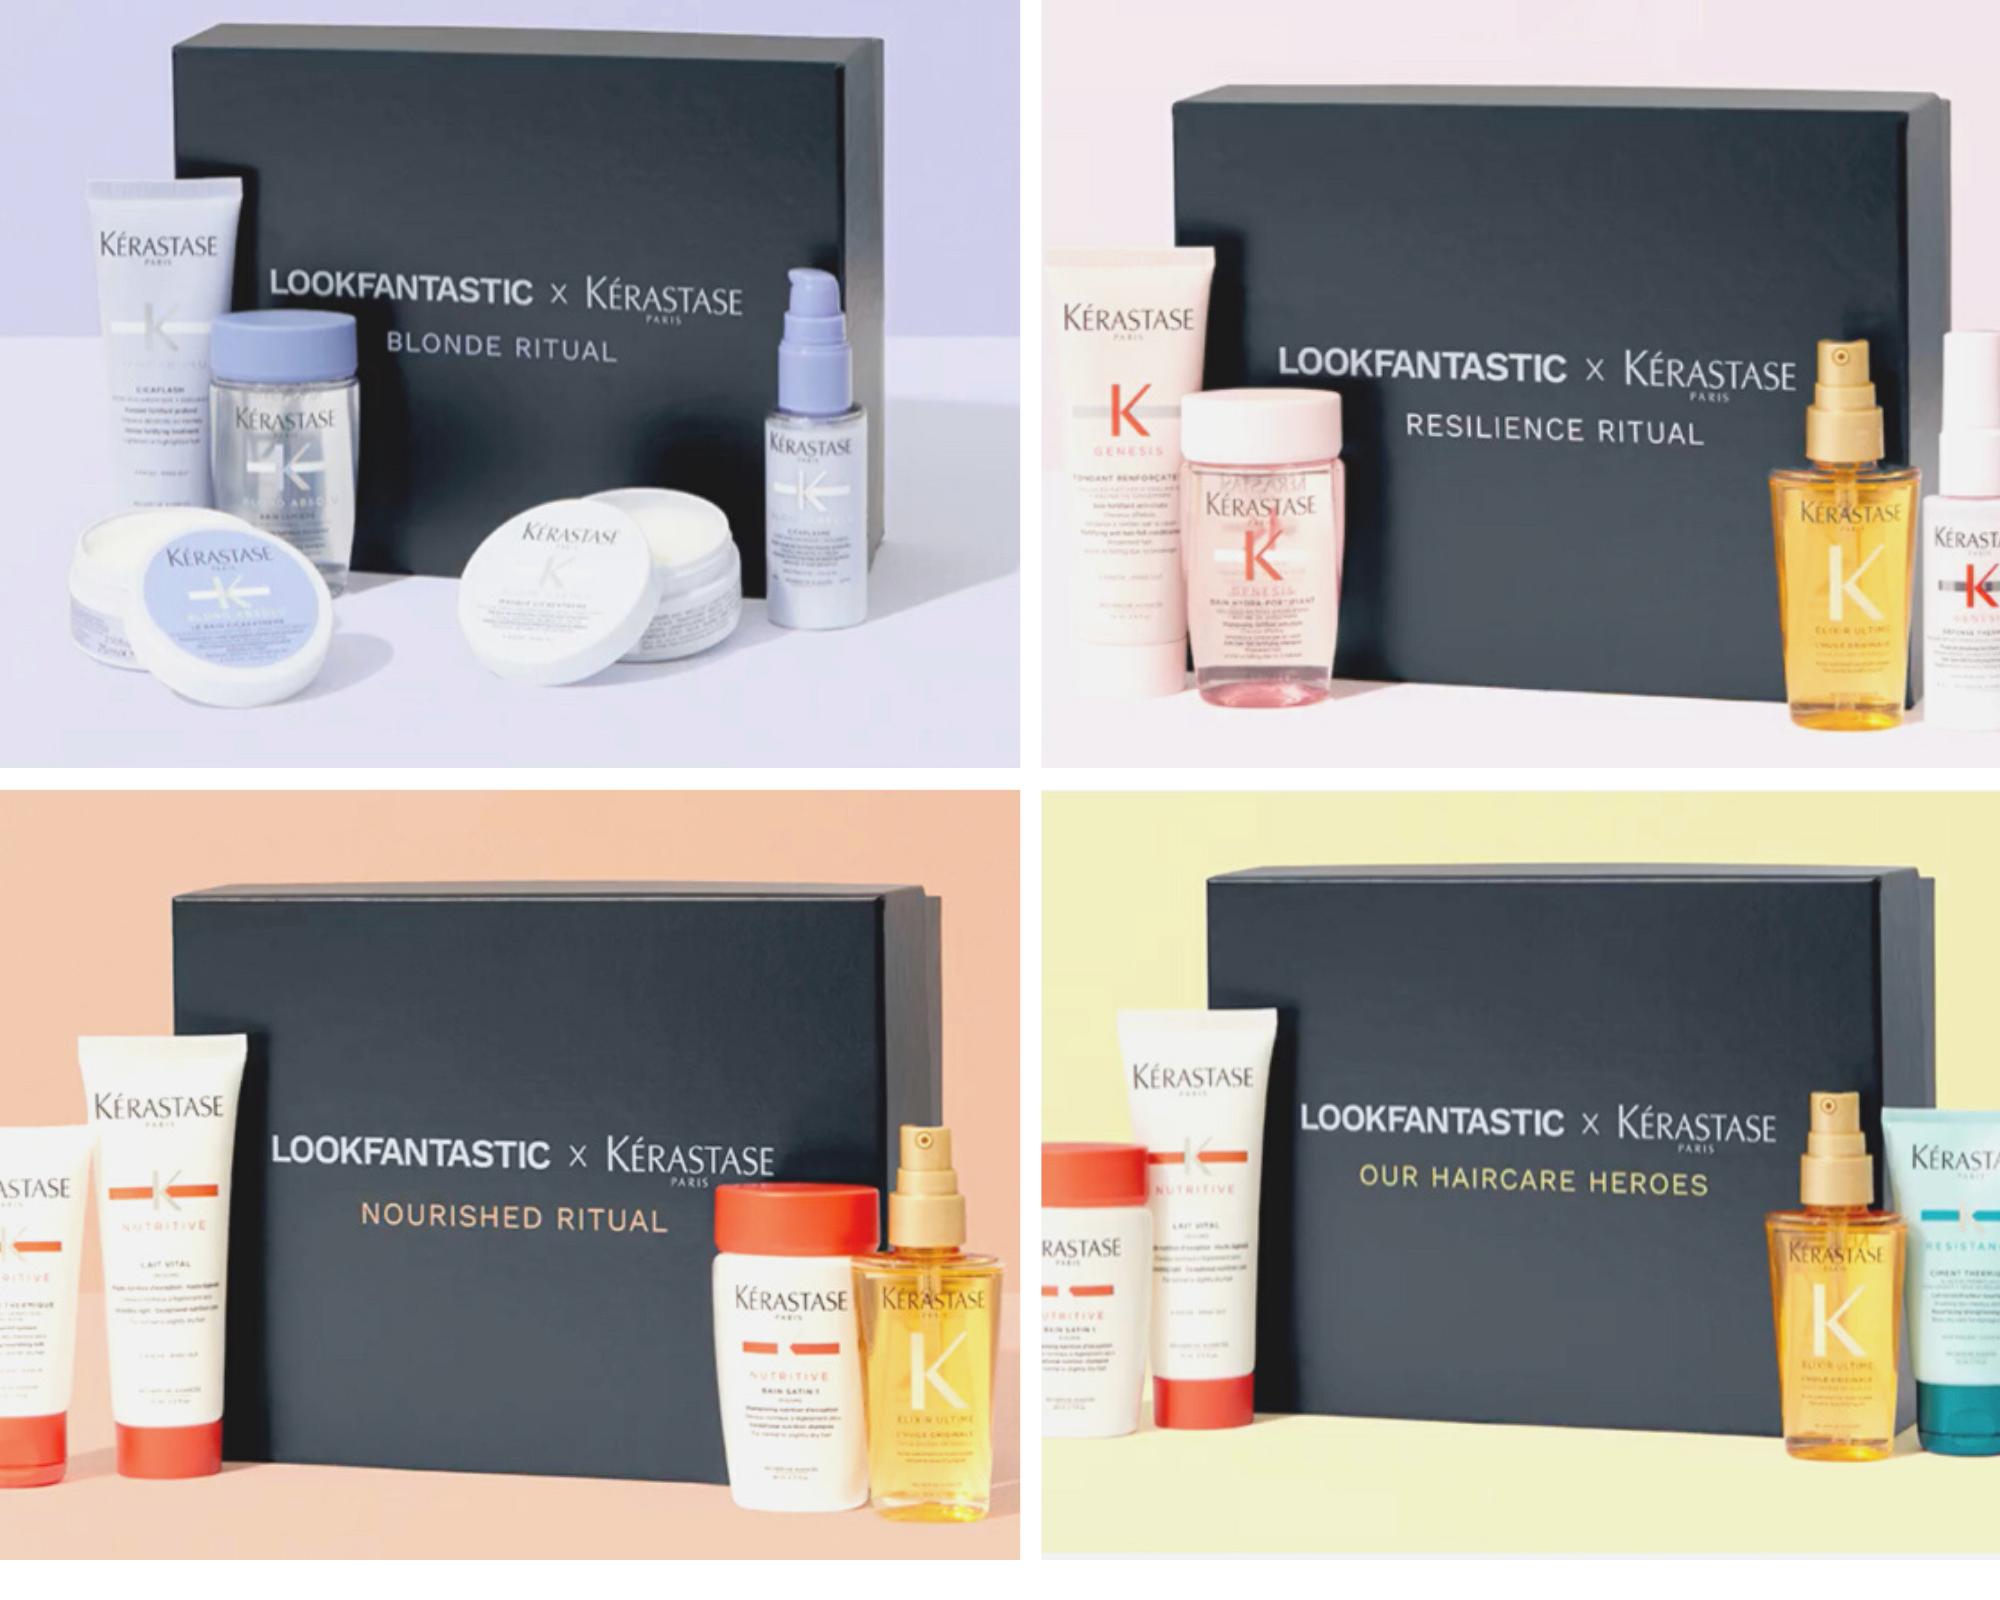 konsonant har Anmelder Beautyqueenuk | A UK Beauty and Lifestyle Blog: Lookfantastic x Kérastase  Beauty Boxes Revealed